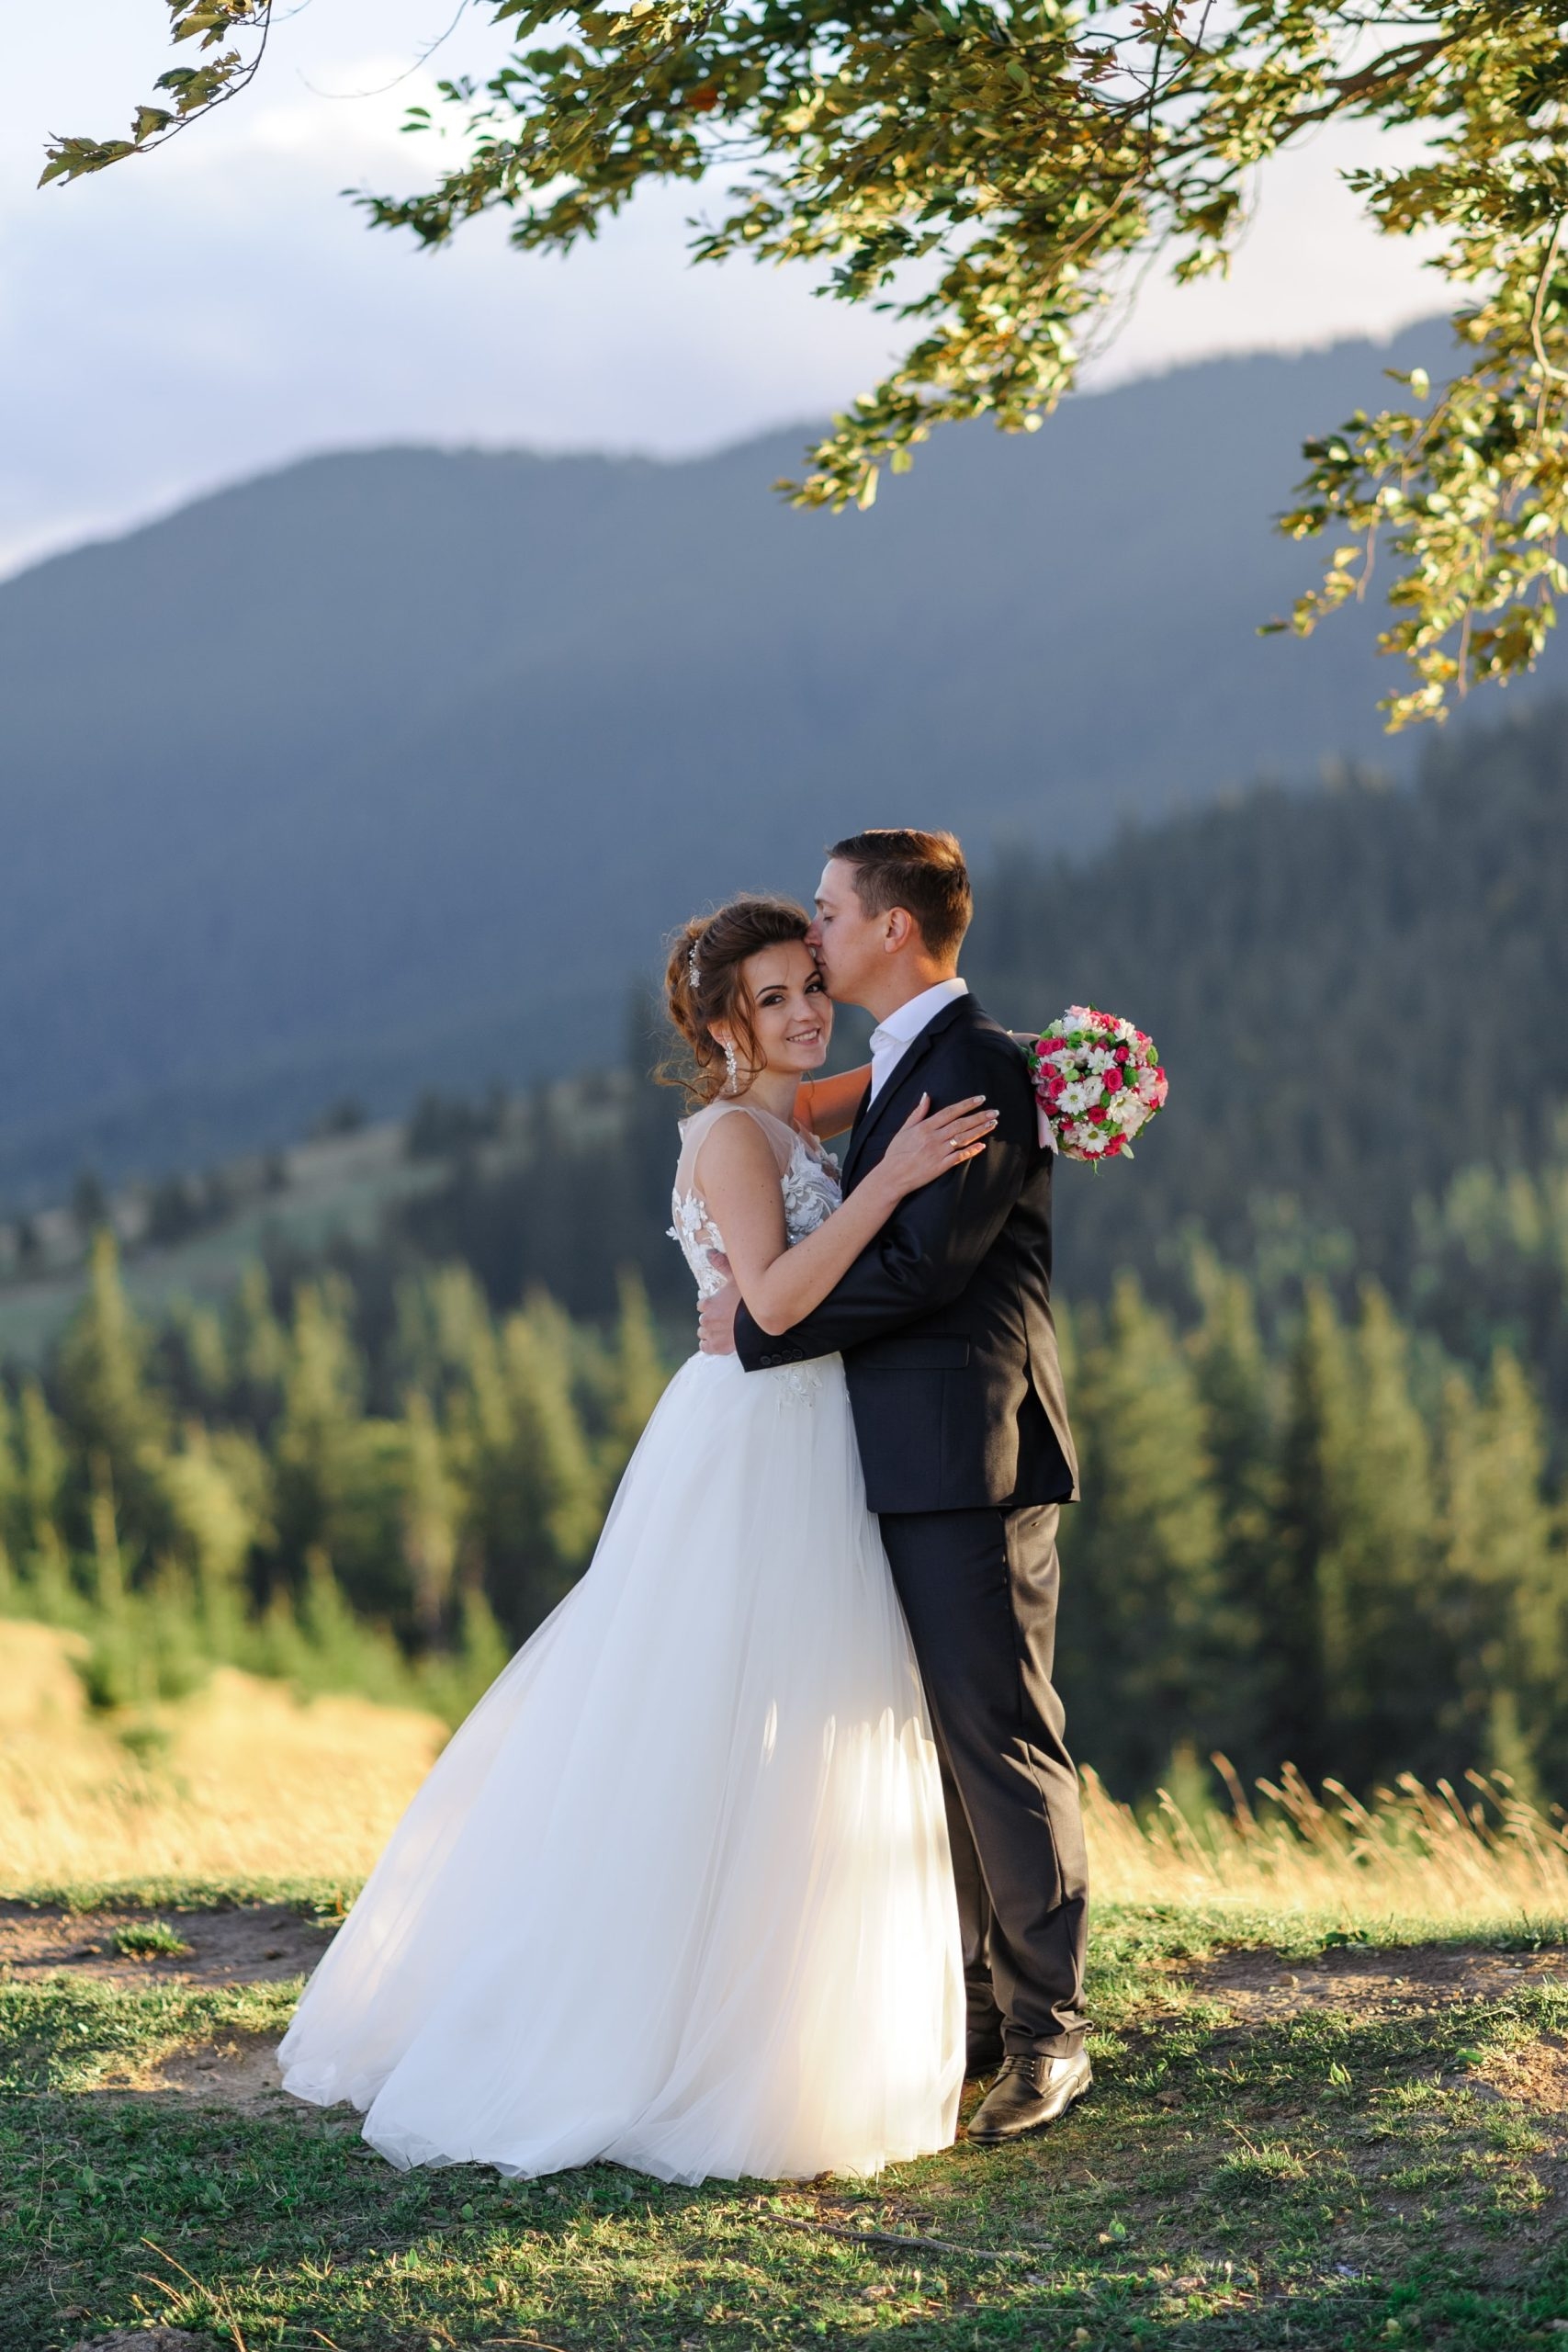 wedding photography in the mountains the groom ki 2021 09 01 15 26 24 utc min scaled